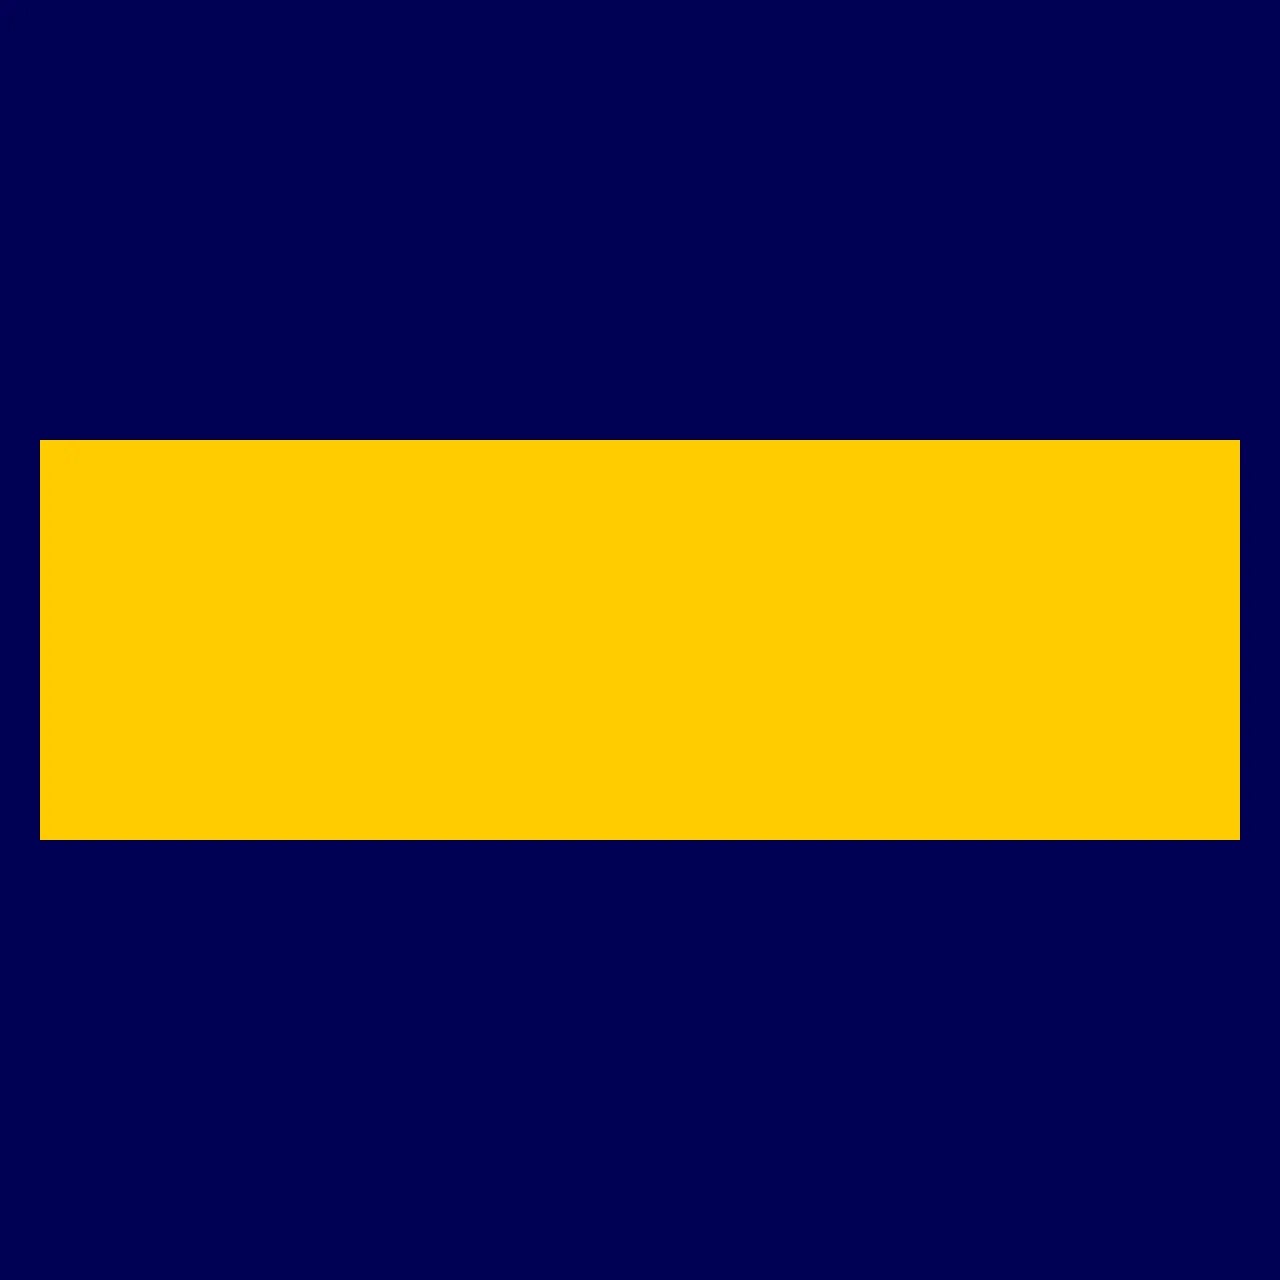 Флаг синий оранжевый желтый. Желто голубой флаг. Флаг синий желтый красный горизонтальные. Синий флаг. Флаг синий желтый синий горизонтальные.